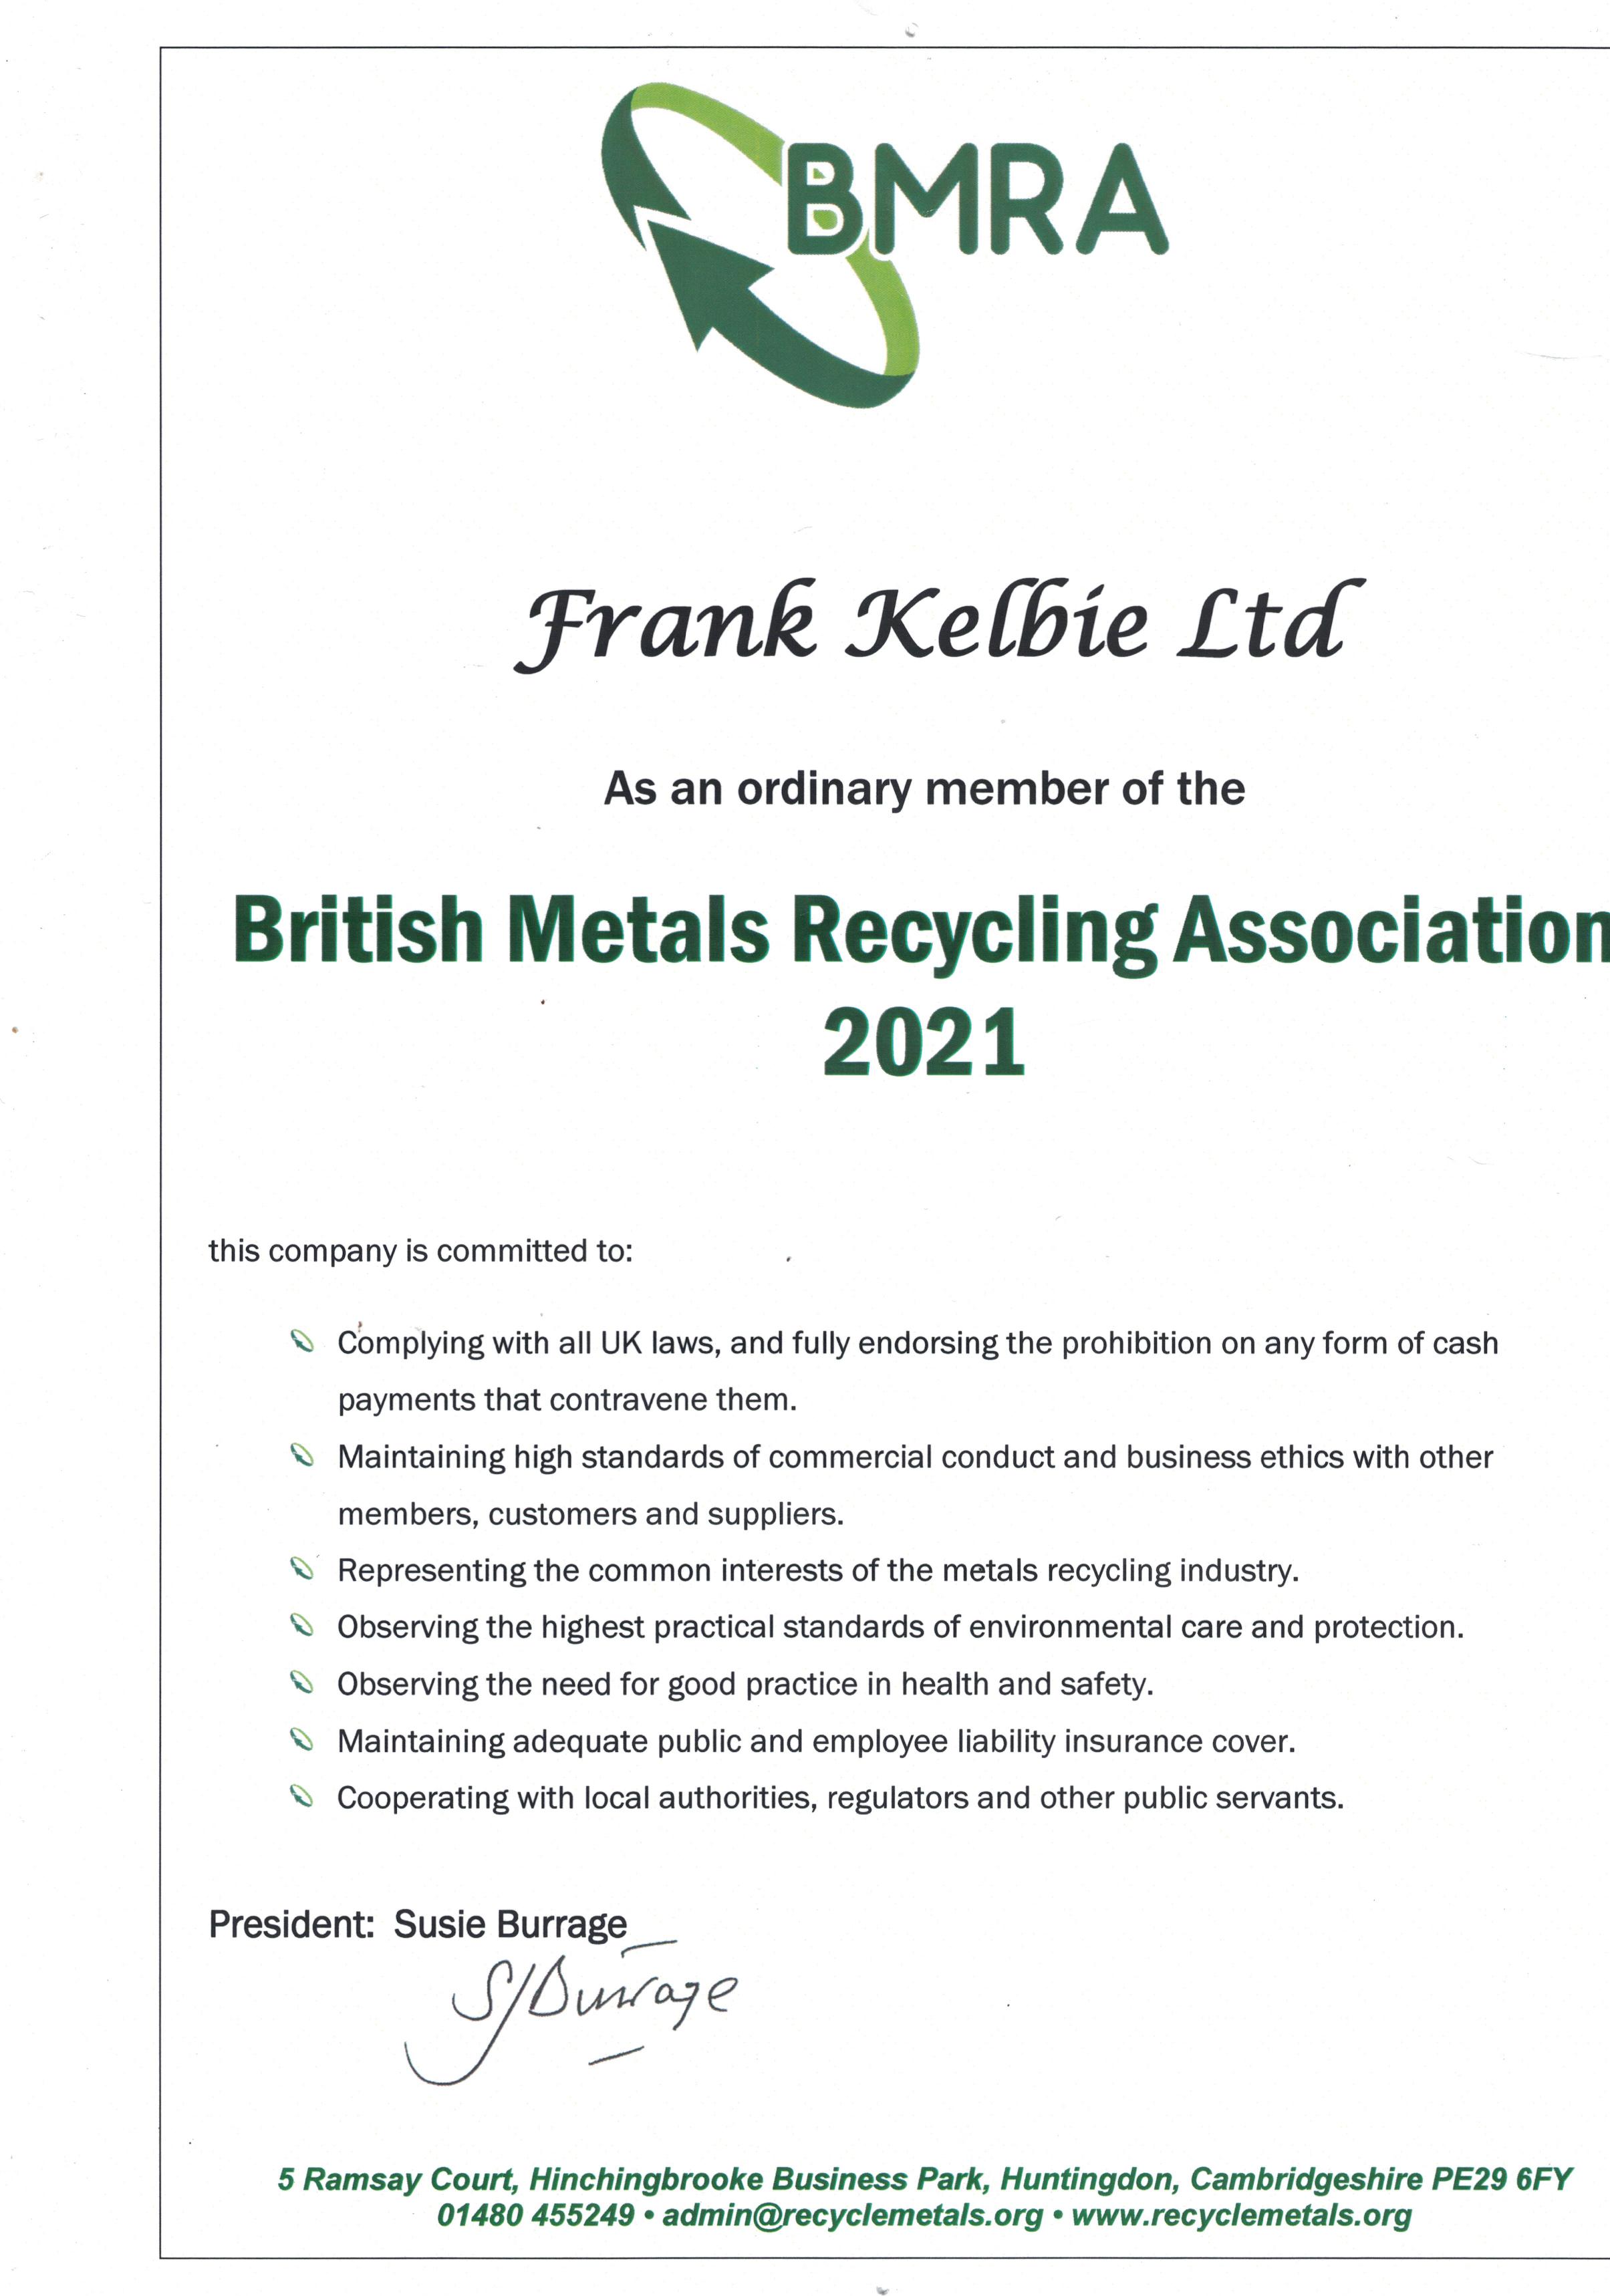 British Metal Recycling Association membership for Frank Kelbie scrap metal